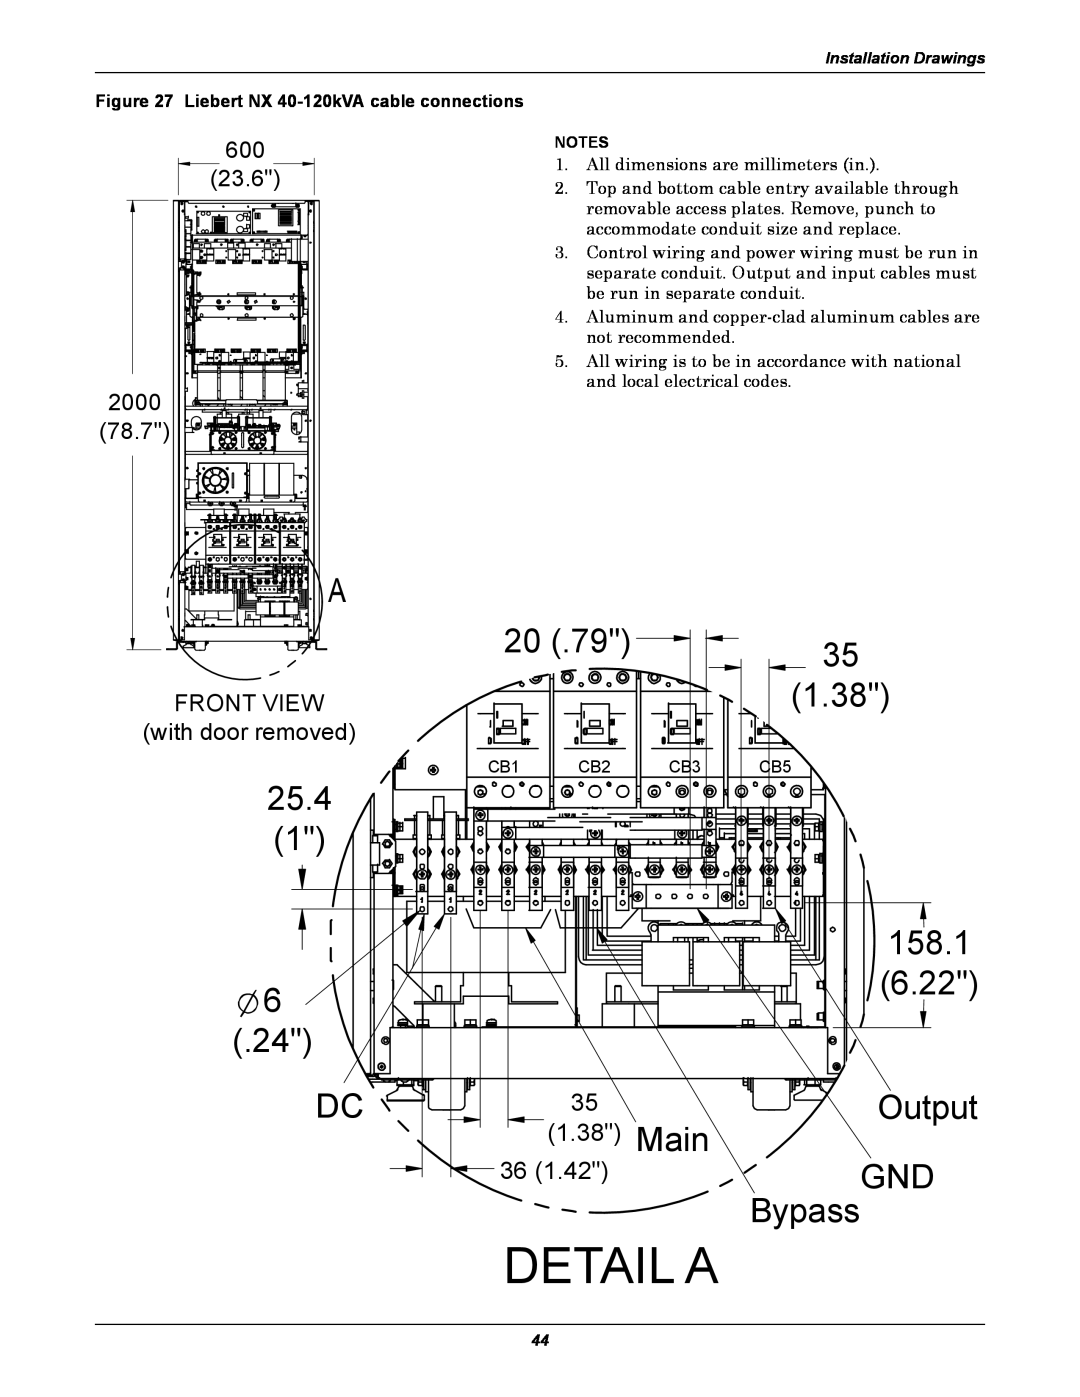 Emerson 60HZ, 480V user manual Detail A 